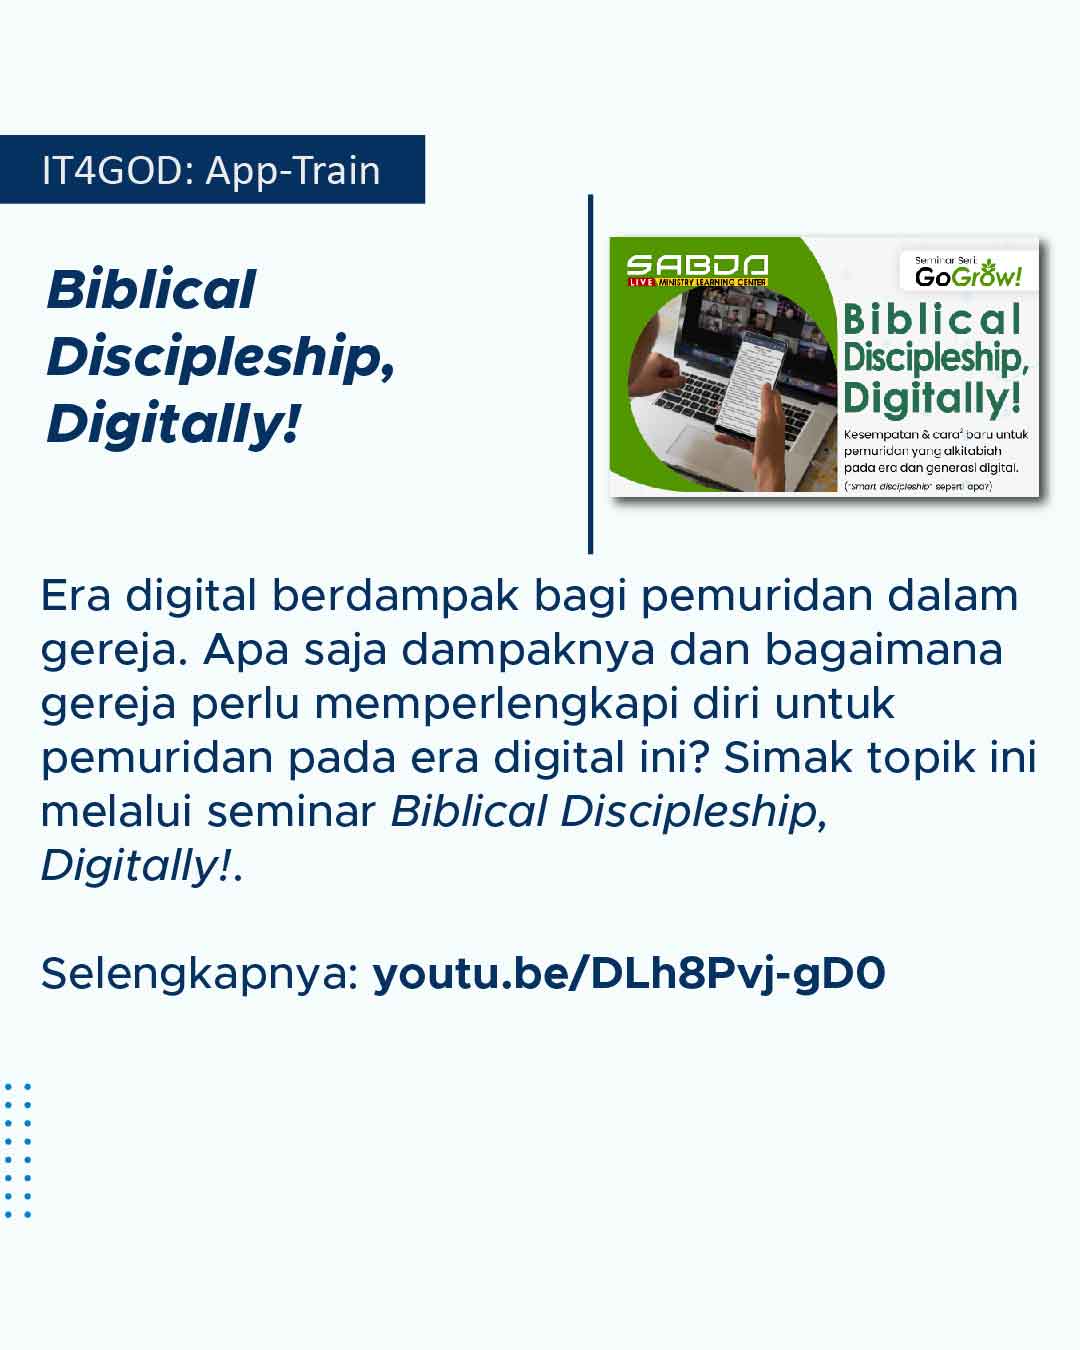 Seminar "Biblical Discipleship, Digitally" membahas tentang gereja yang perlu memperlengkapi diri untuk pemuridan pada era digital.